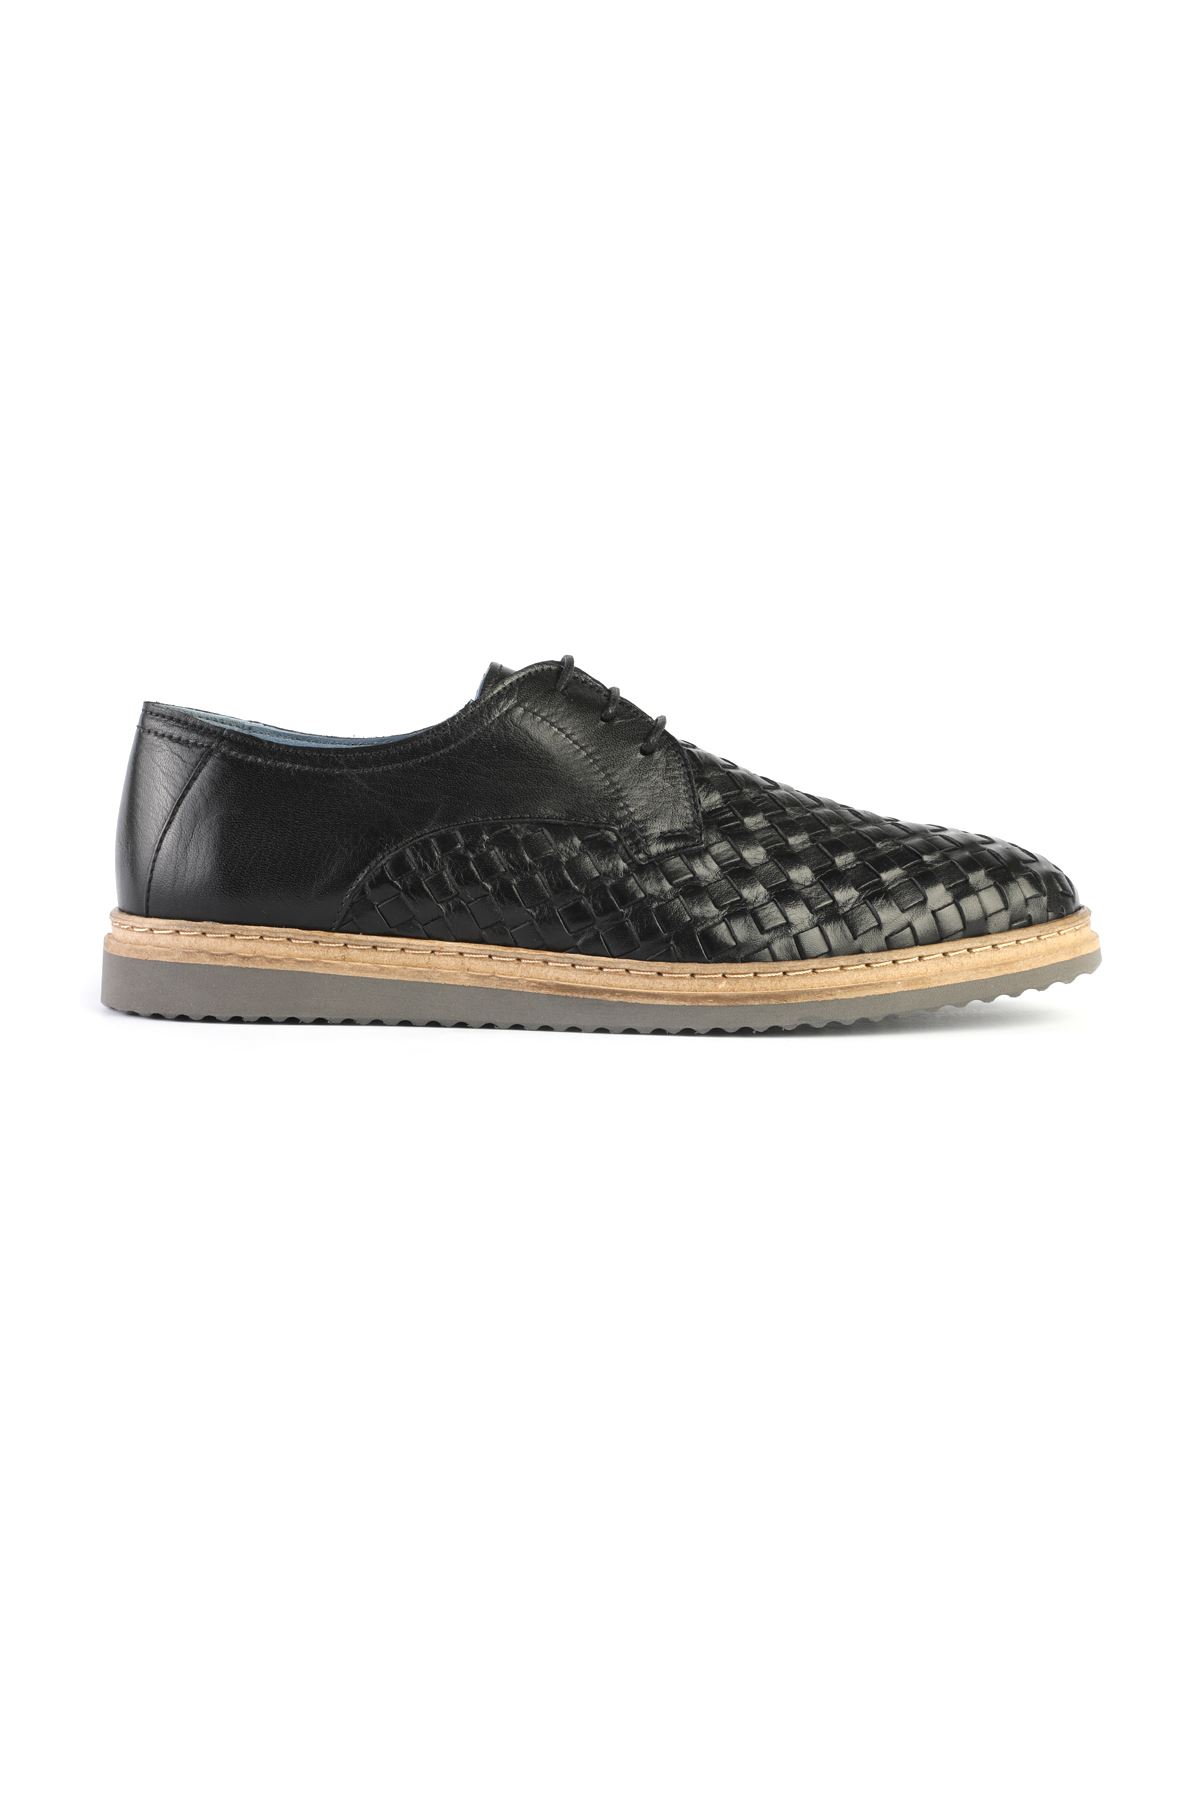 Libero 3297 Black Casual Shoes